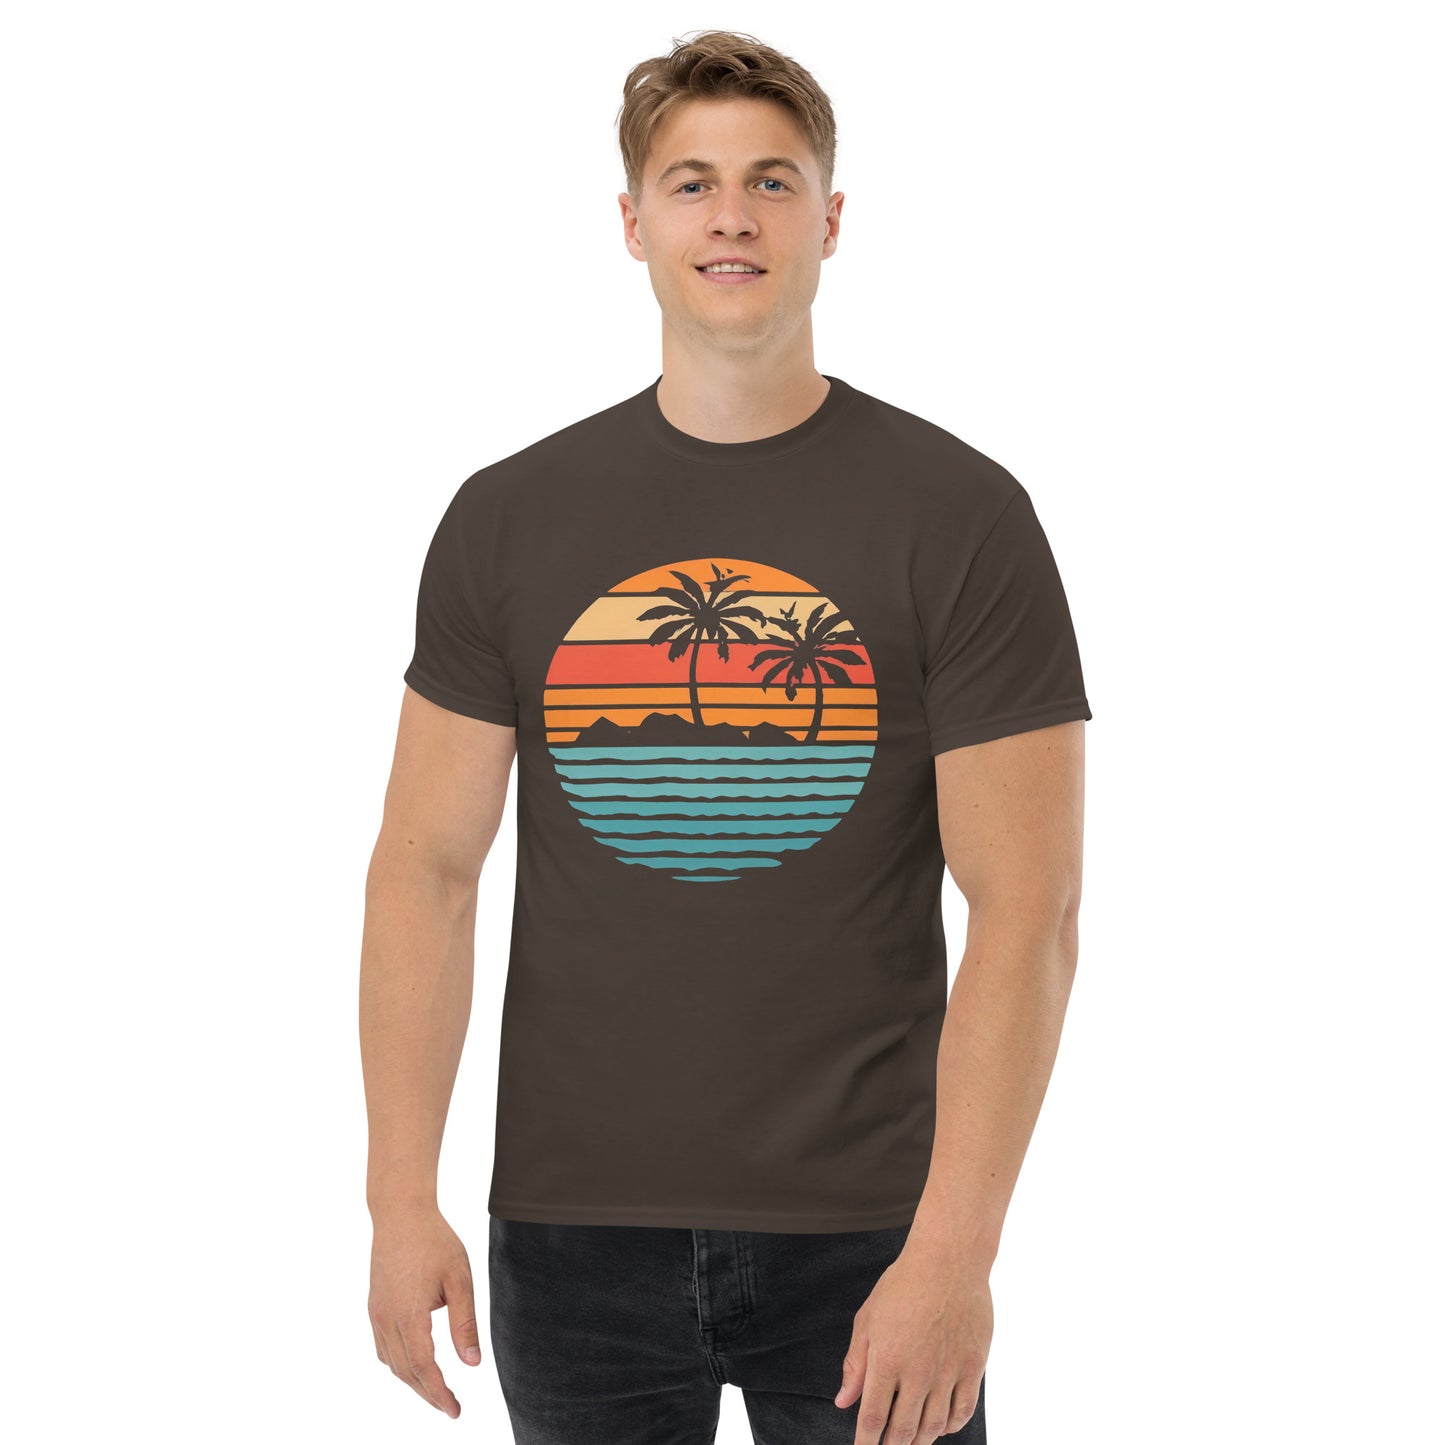 Men with dark chocolate T-shirt and a retro Island